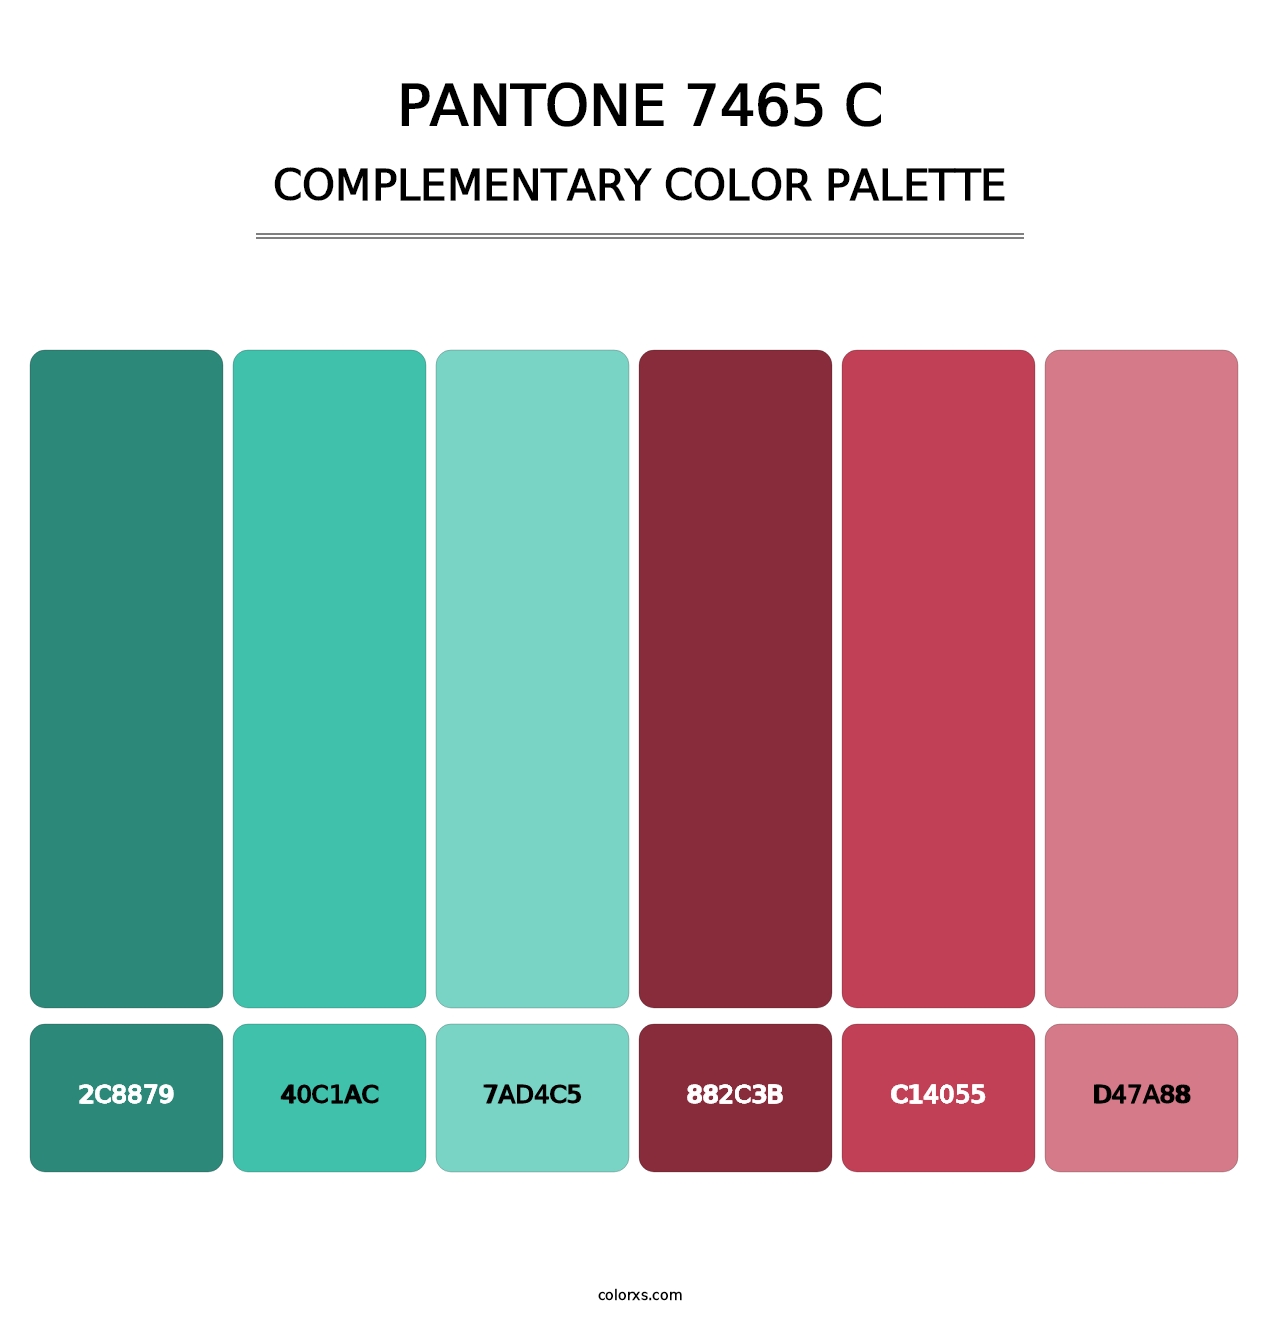 PANTONE 7465 C - Complementary Color Palette